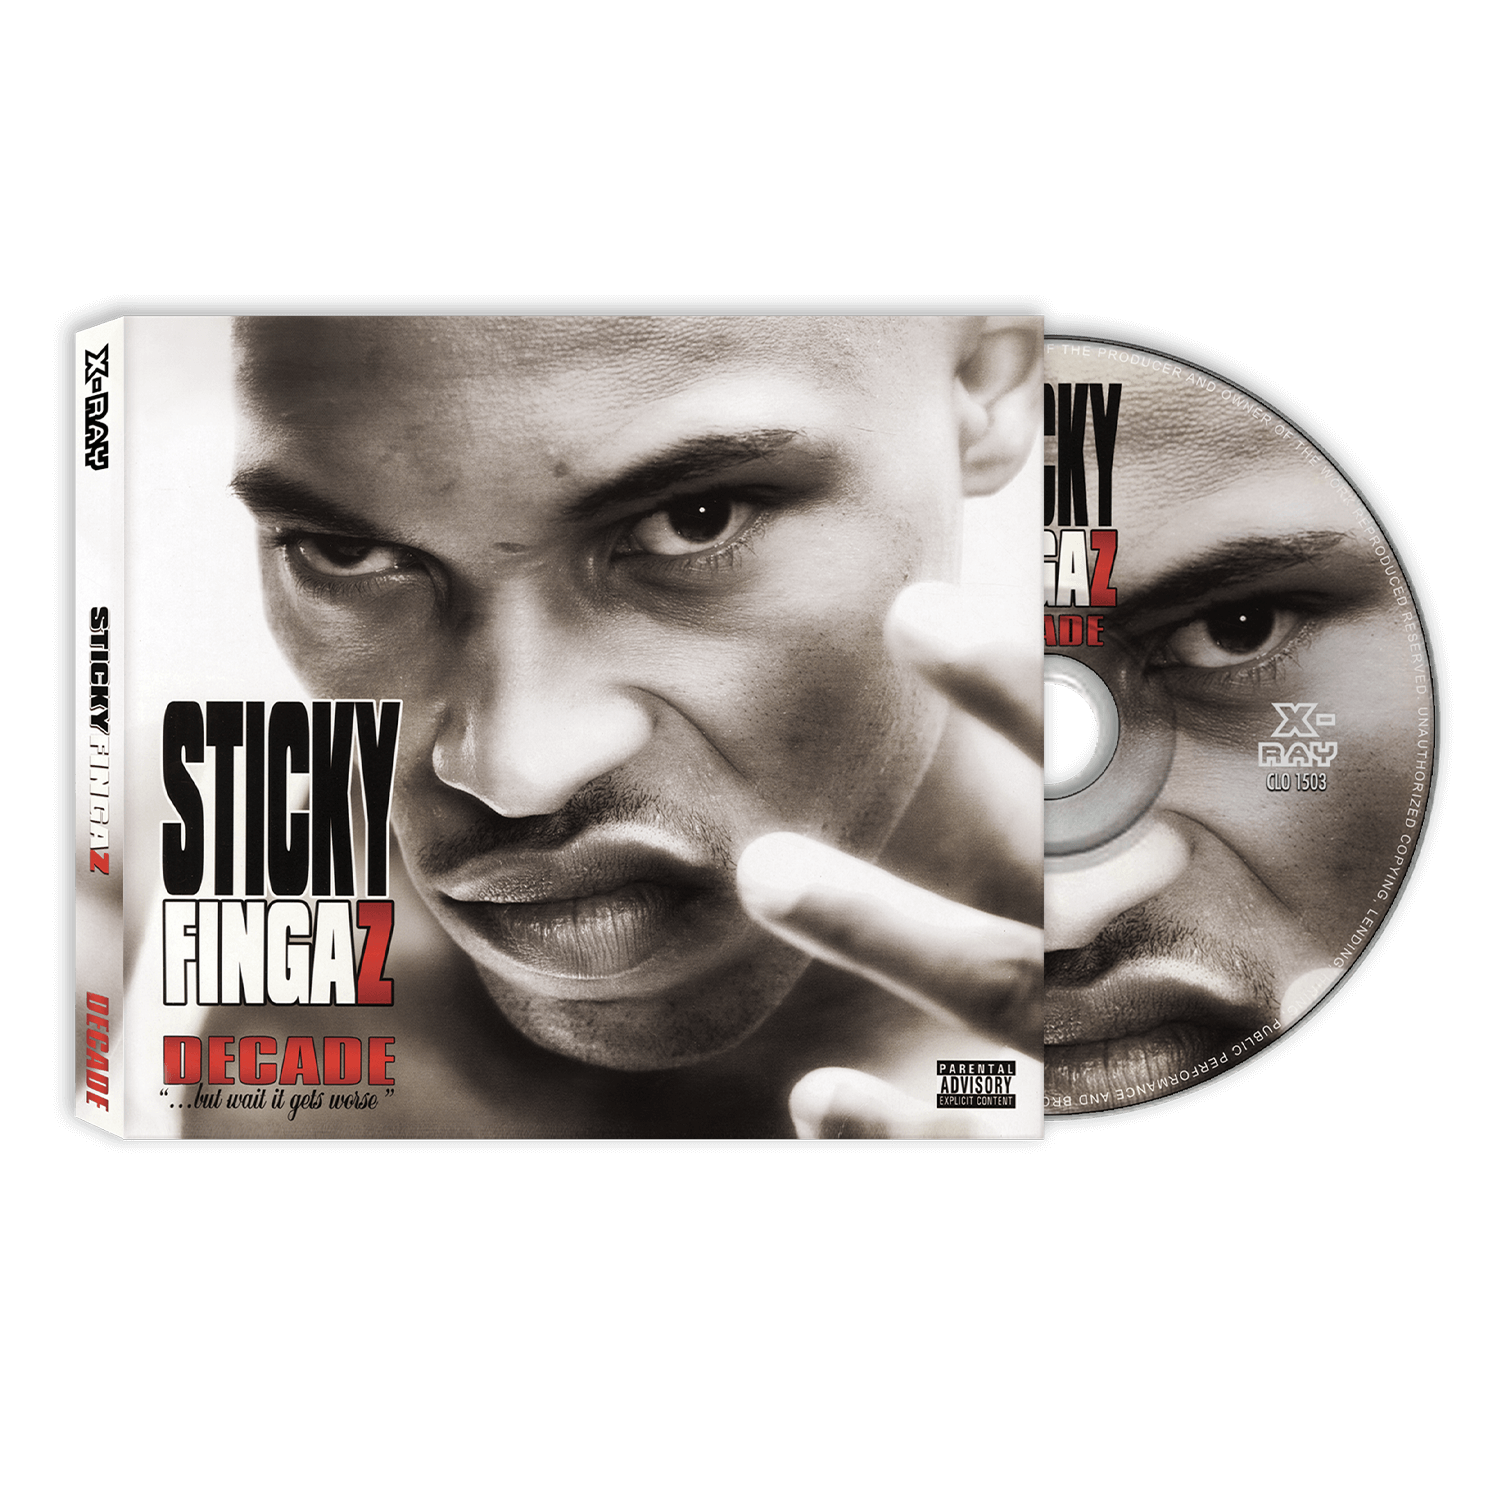 Sticky Fingaz - Decade...But Wait It Gets Worse (CD Digipak)